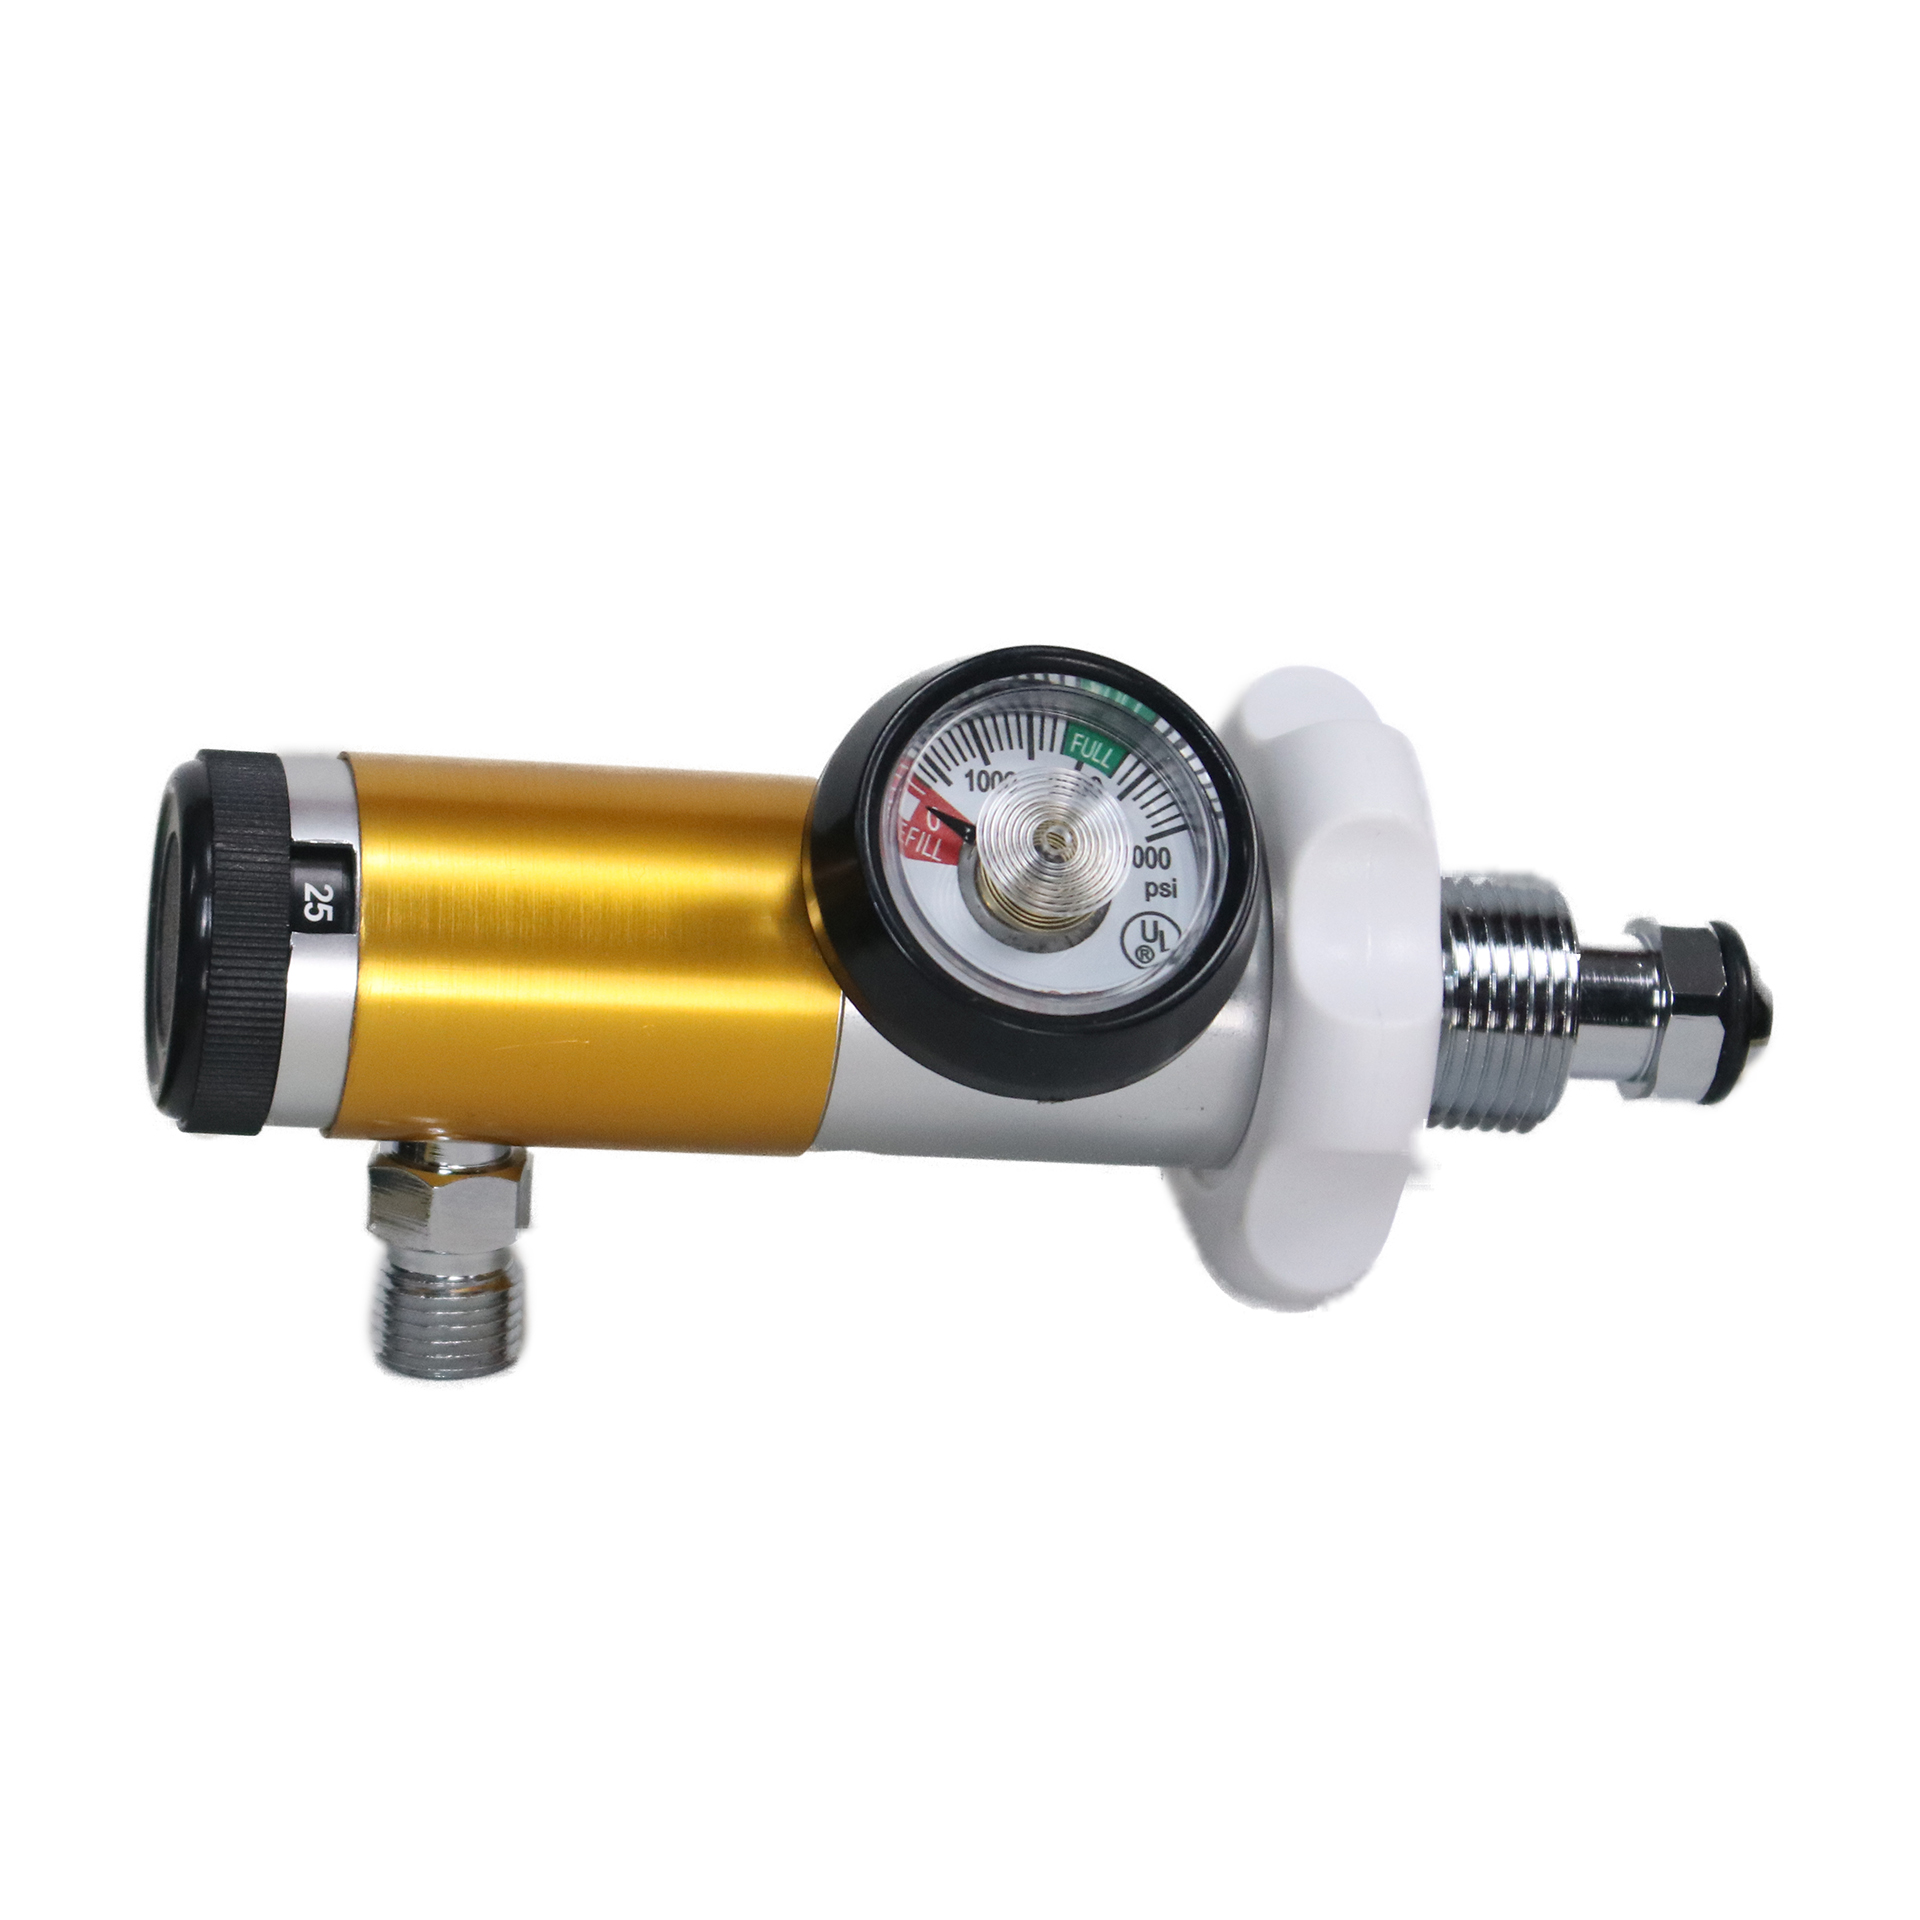 0-15L Nitrogen pressure regulator CGA580 input for N2 gas regulator